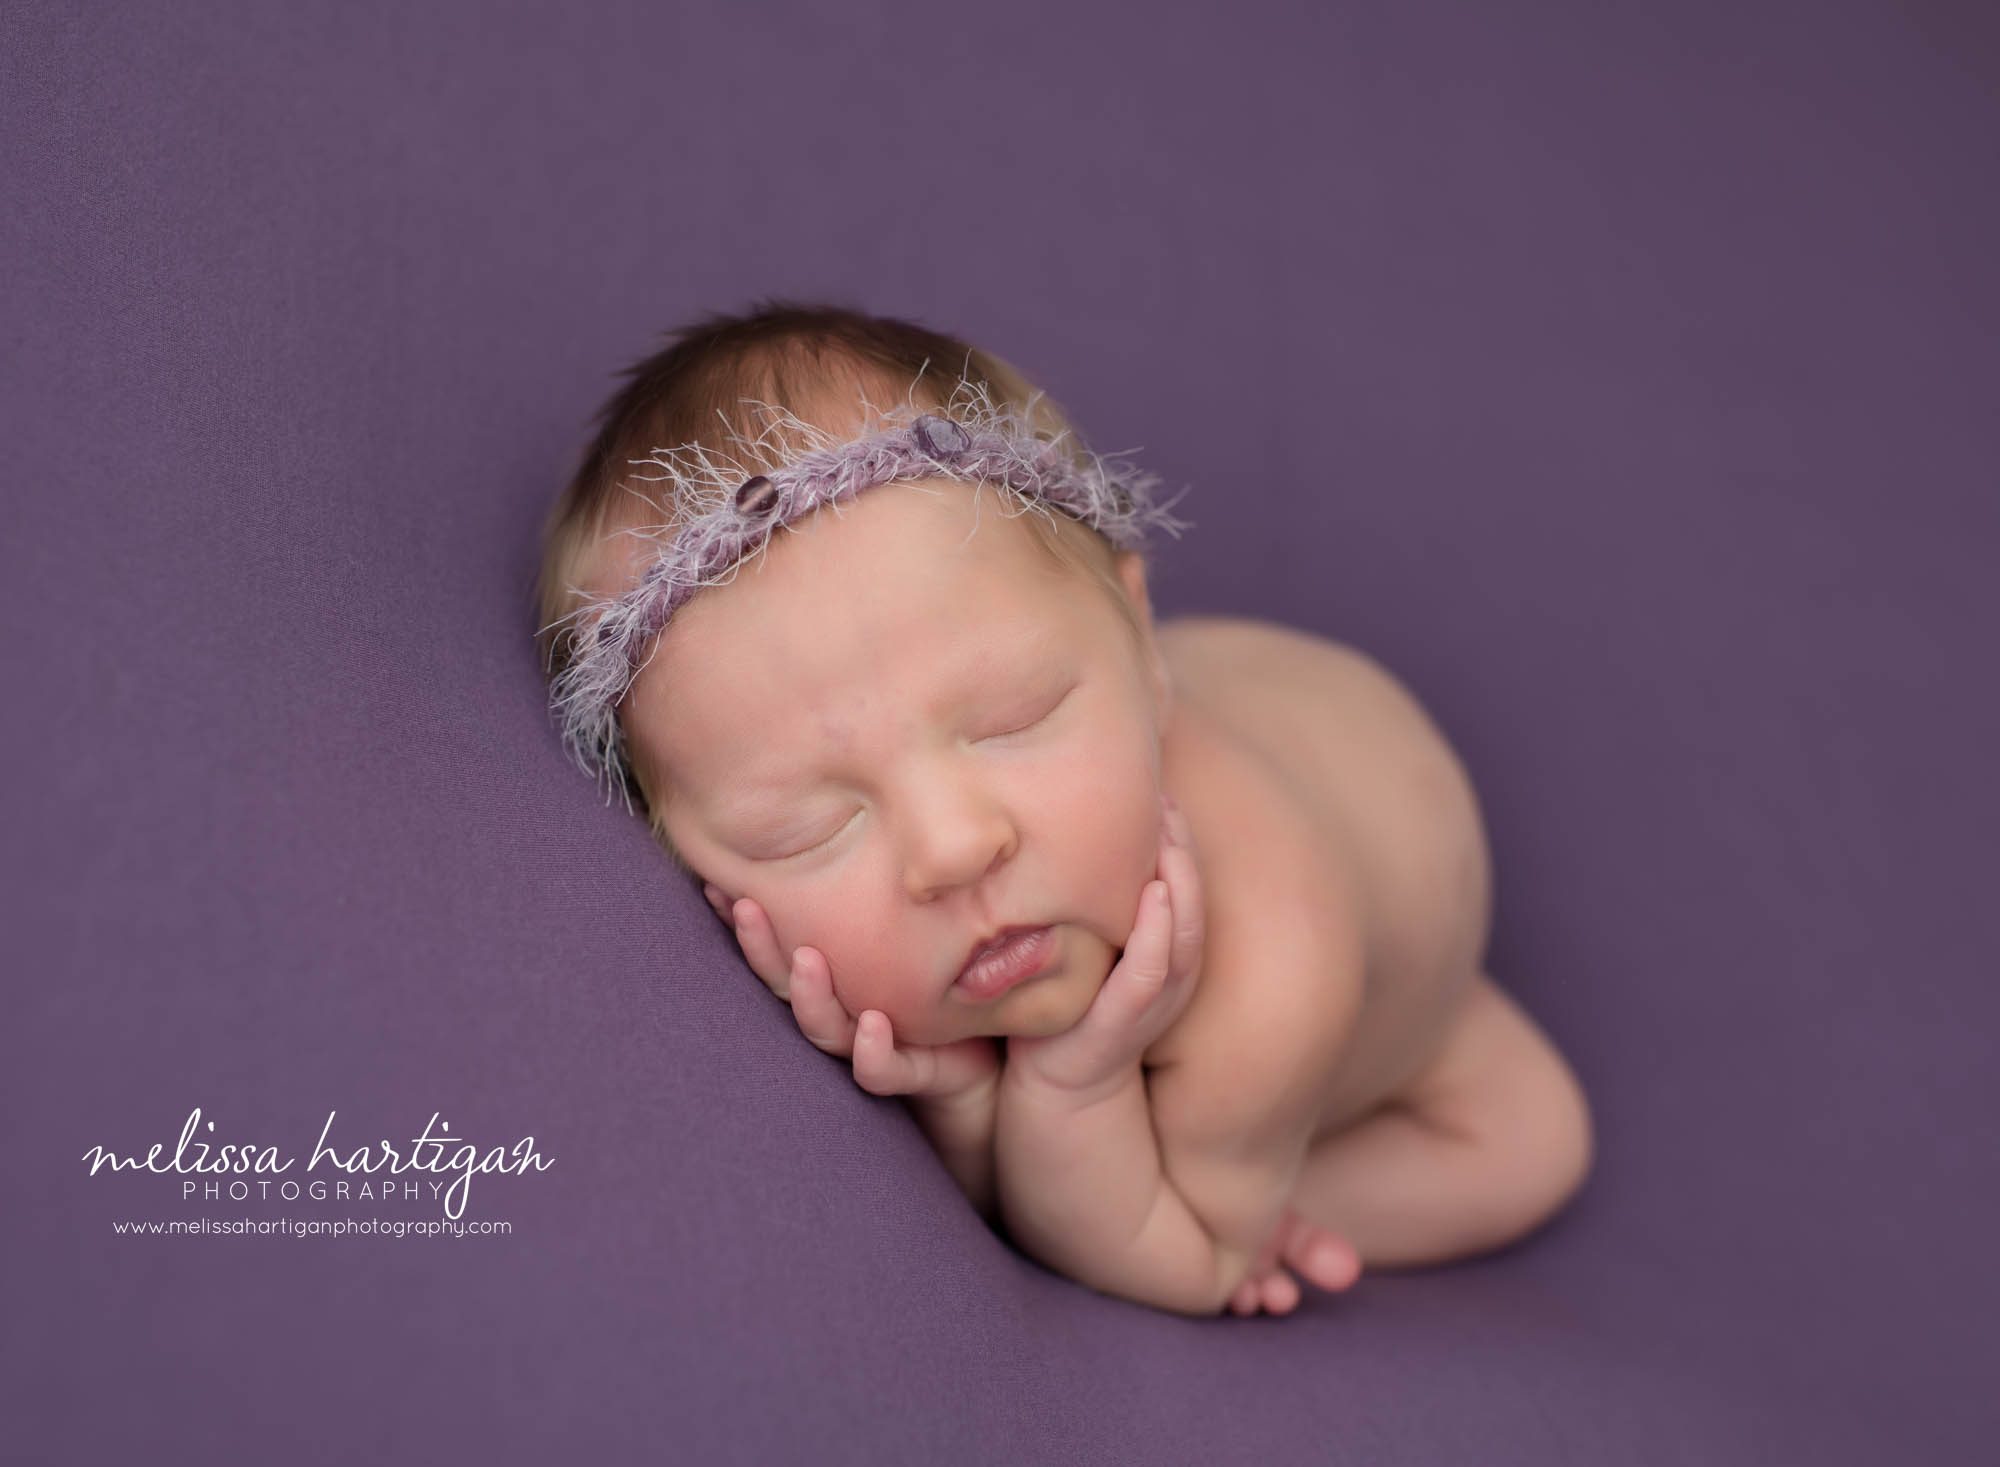 newborn baby girl posed with hands under chin on purple backdrop with purple headband CT newborn photography